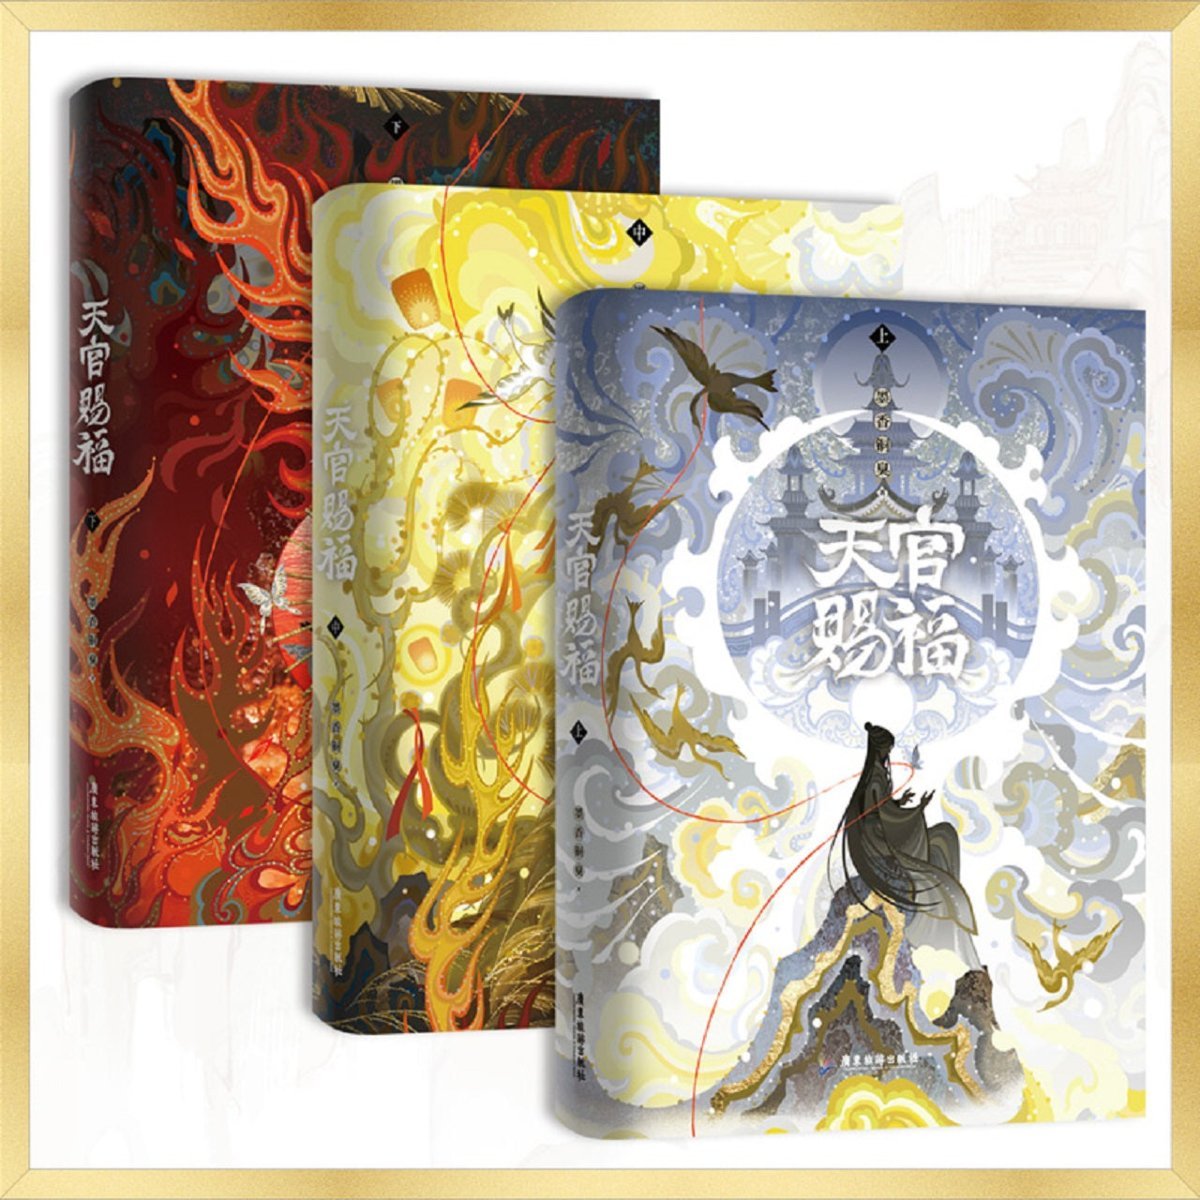 Heaven Official's Blessing: Tian Guan Ci Fu (Novel) Vol. 3 by Mò